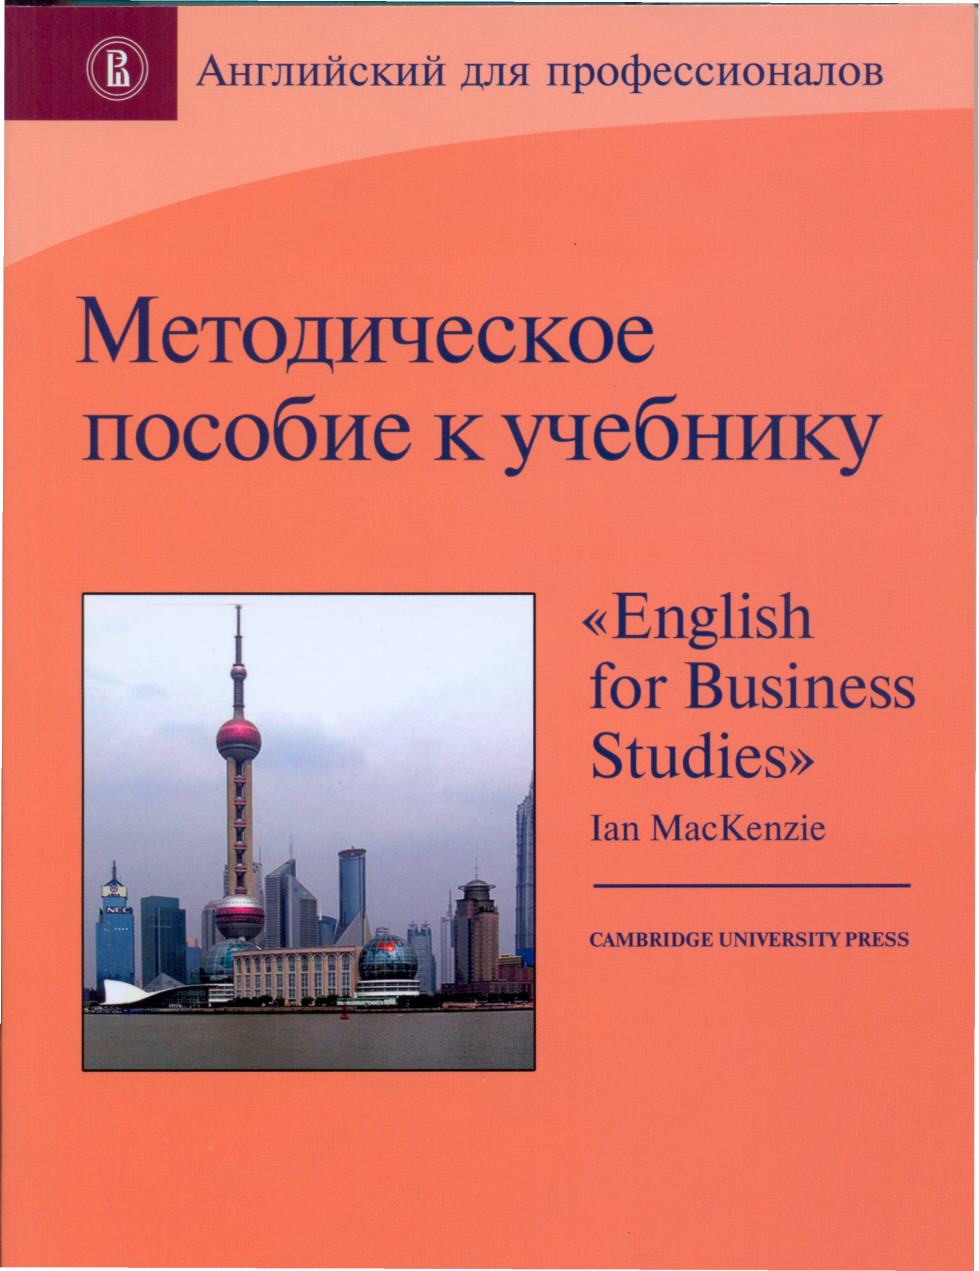 Методическое пособие к учебнику «English fог Business Studies», (З-е изд., автор Ian MacKenzie)